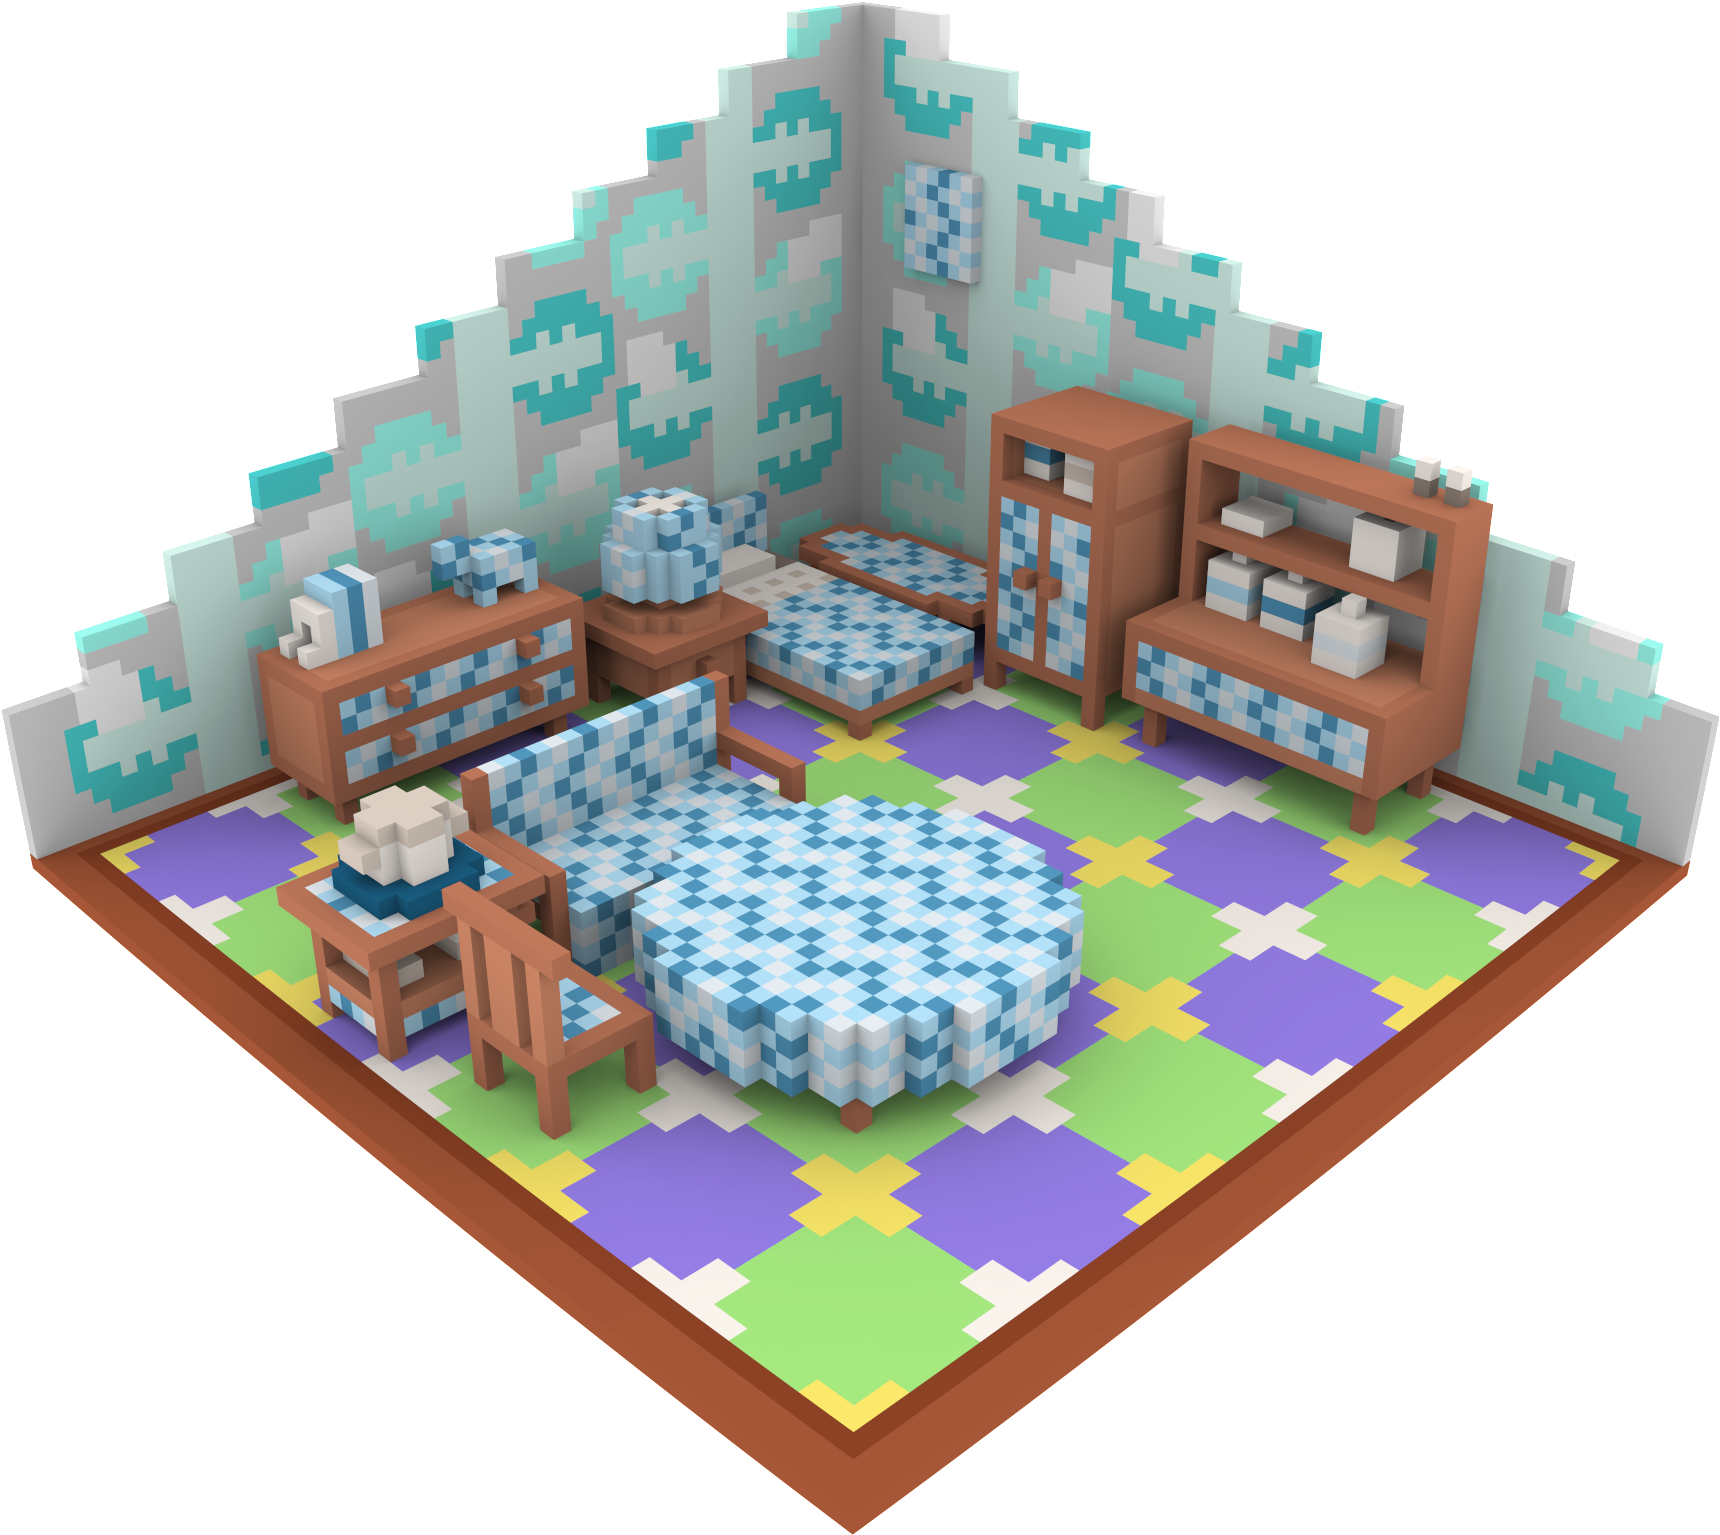 Animal Crossing Pixel Room Design PNG image